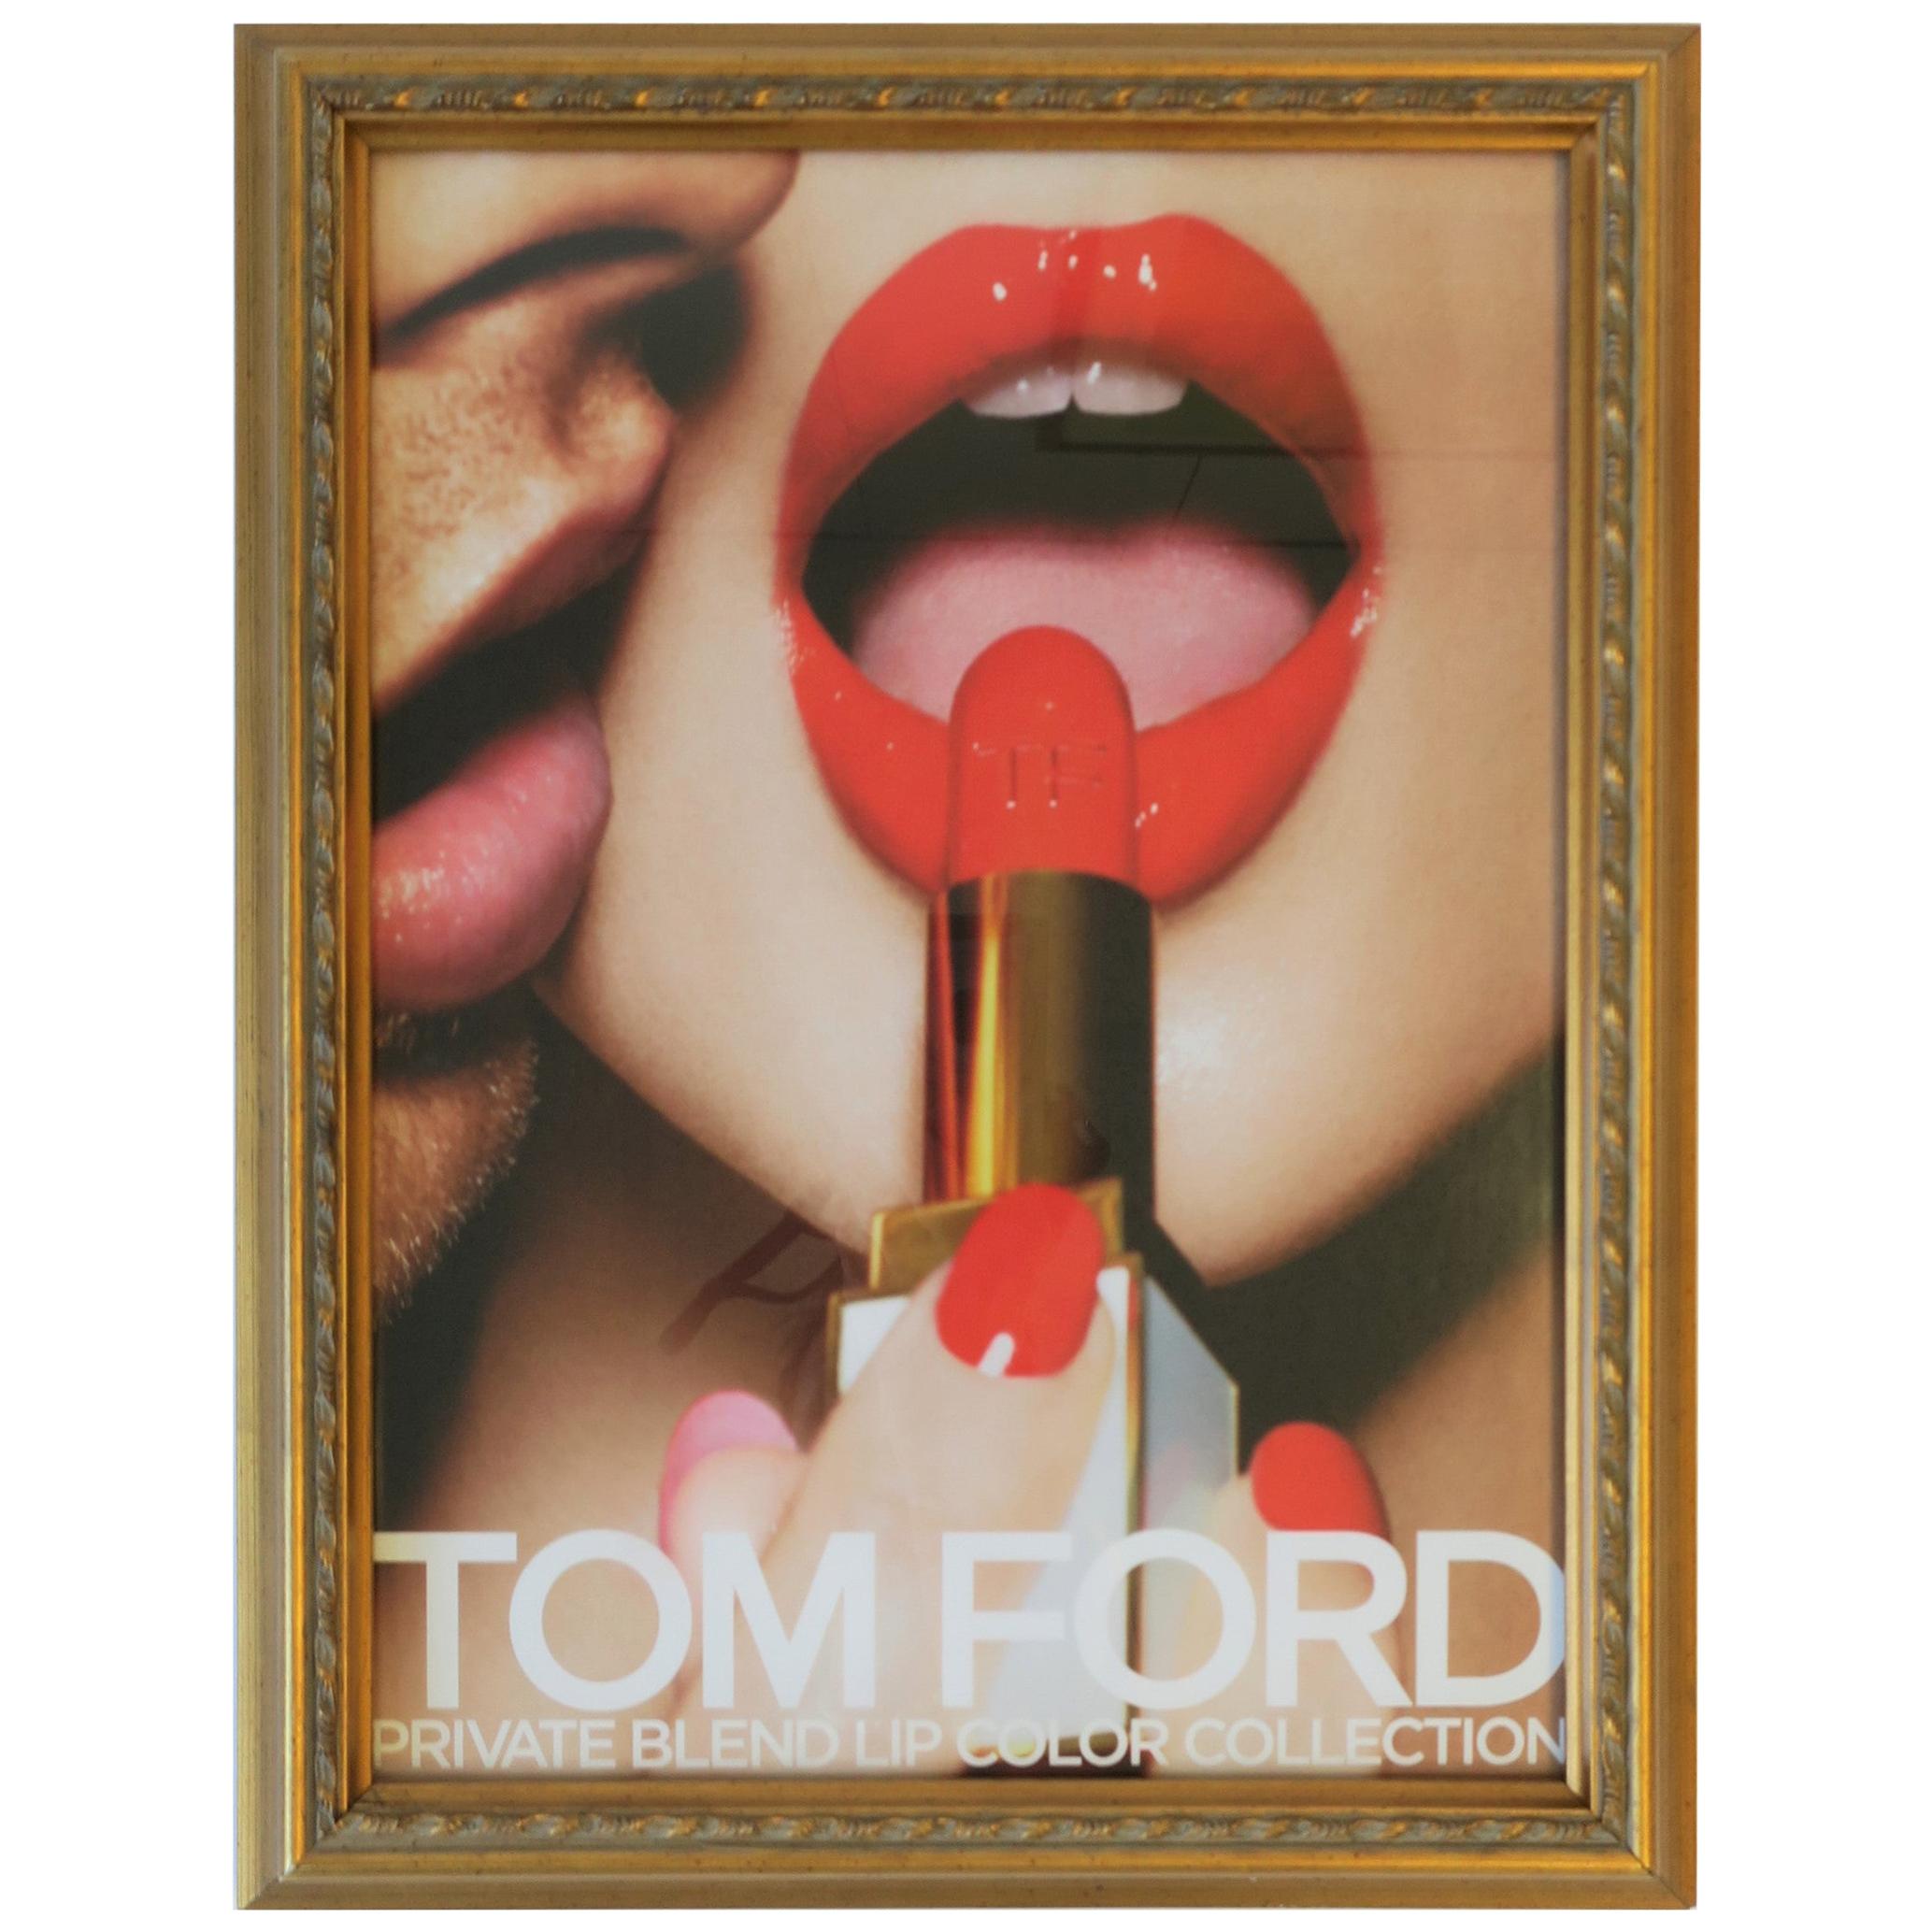 Tom Ford Framed Makeup Print Advertisement Wall Art